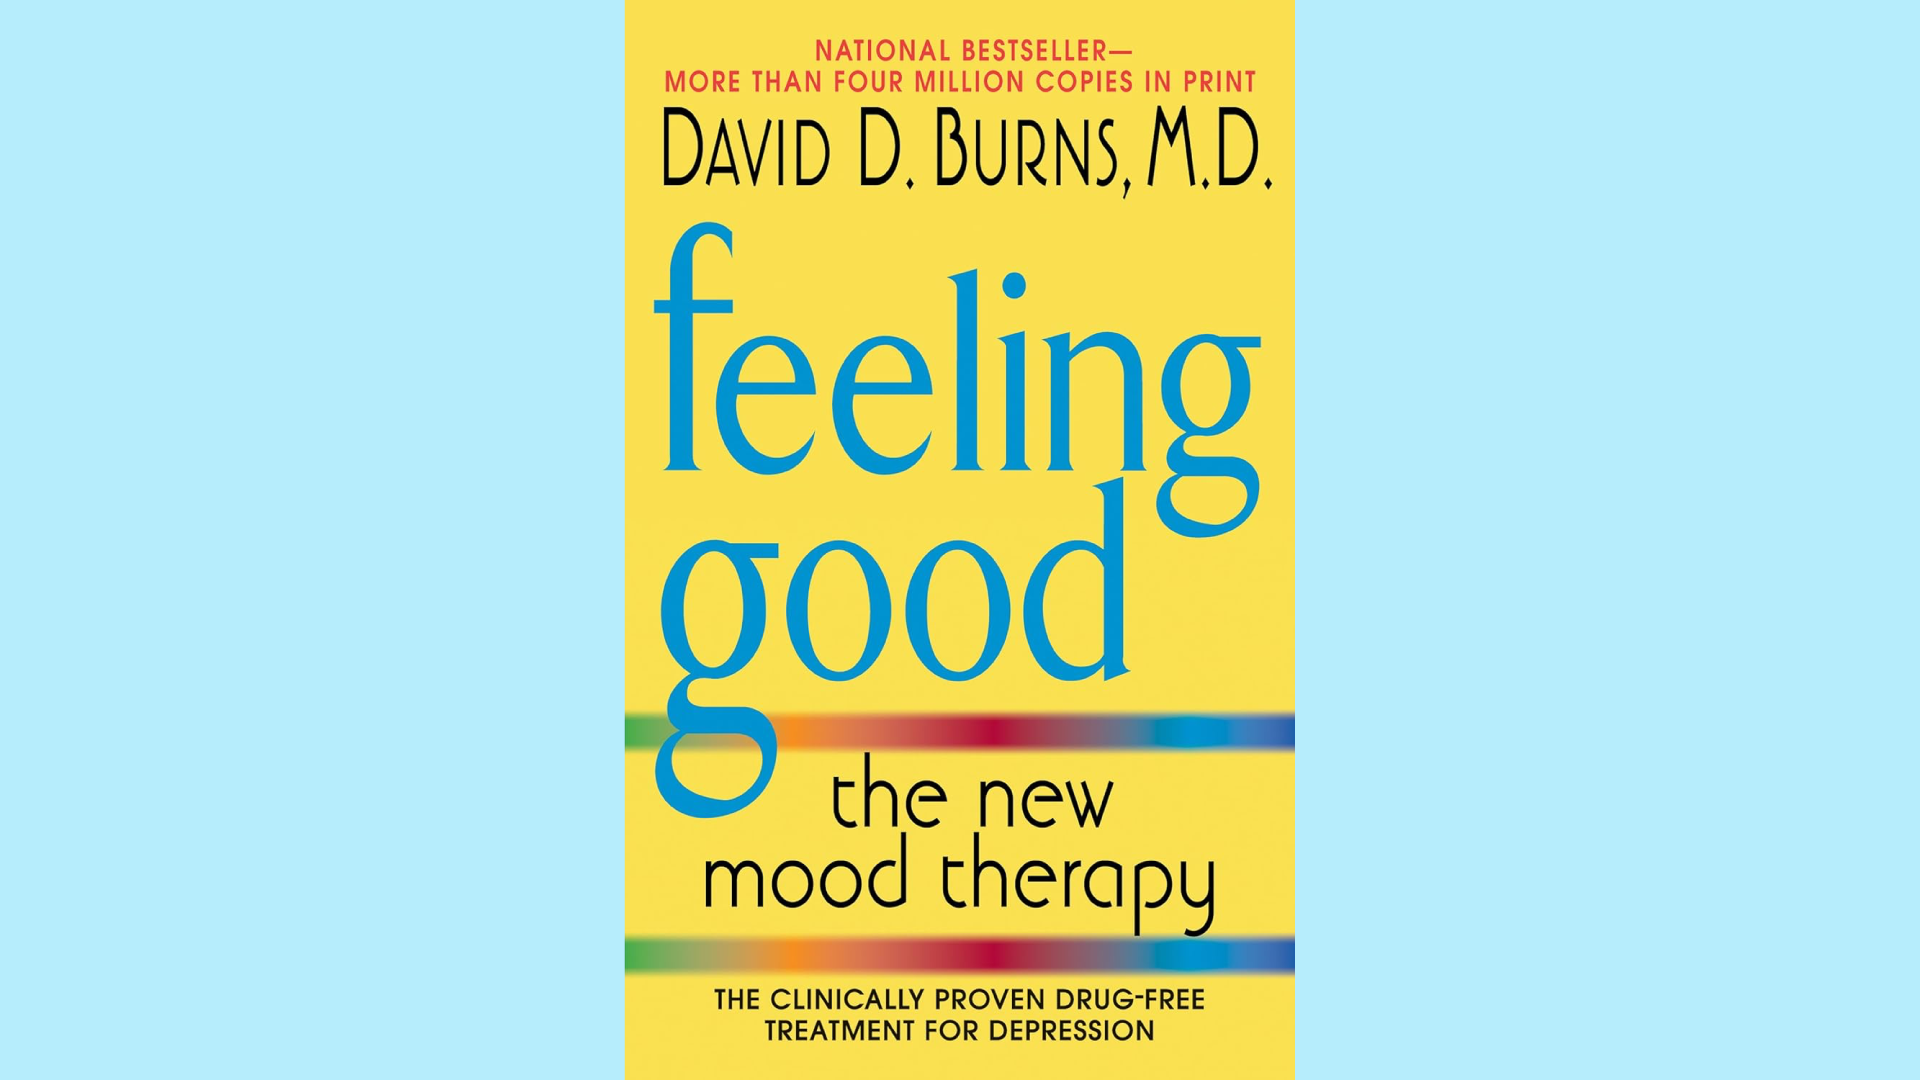 Summary: Feeling Good by David Burns